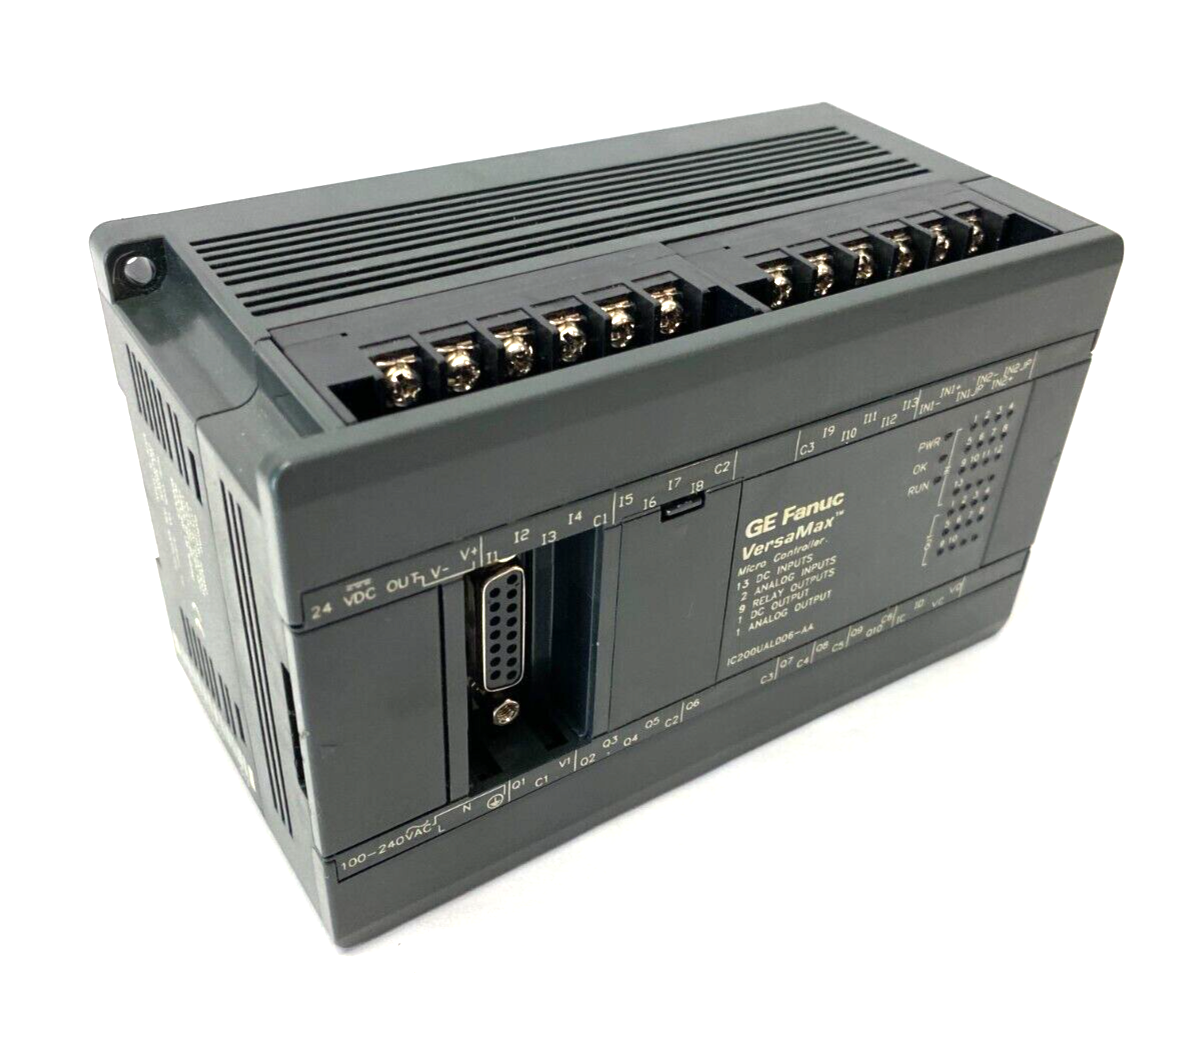 GE Fanuc IC200UAL006-AA VersaMax Analog Micro Controller Module 23 Point